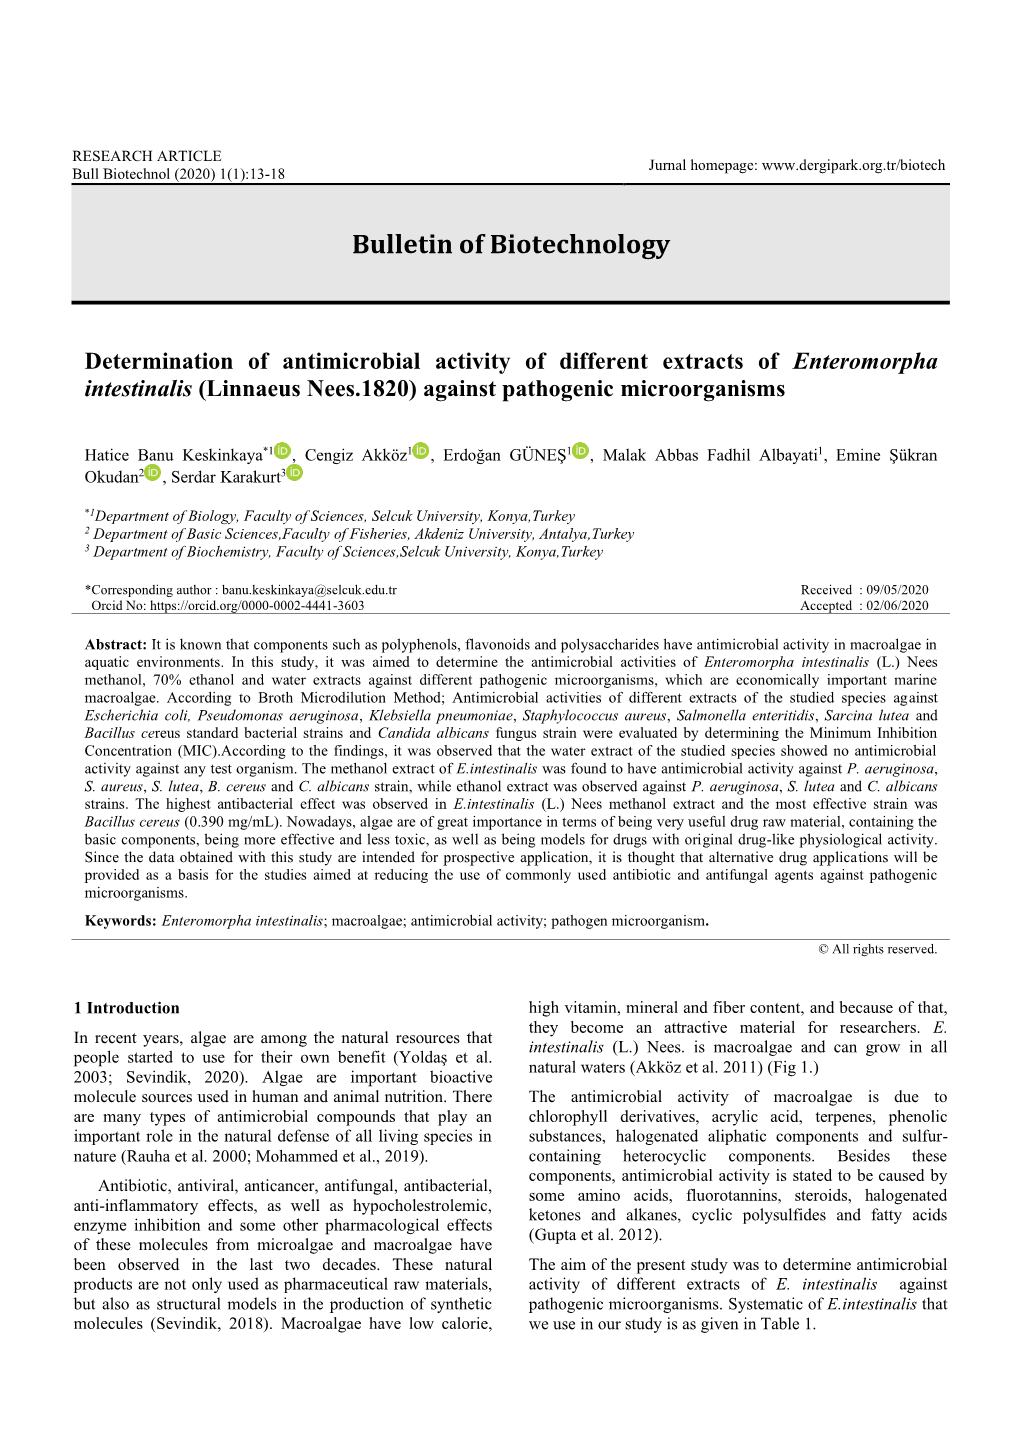 Bulletin of Biotechnology